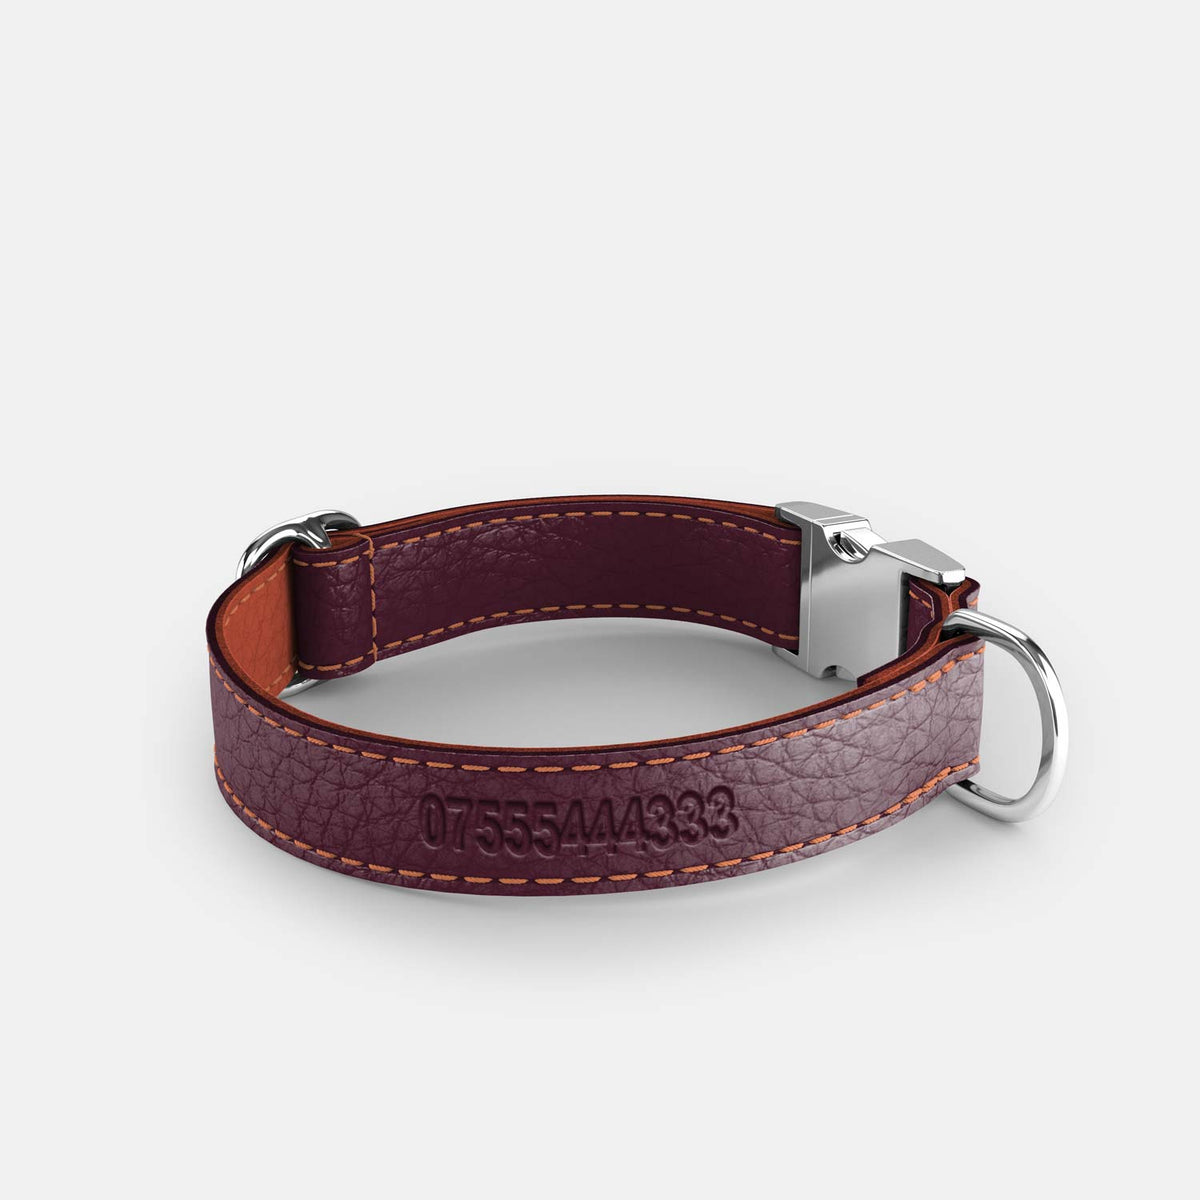 Leather Dog Collar - Dark Purple and Coral